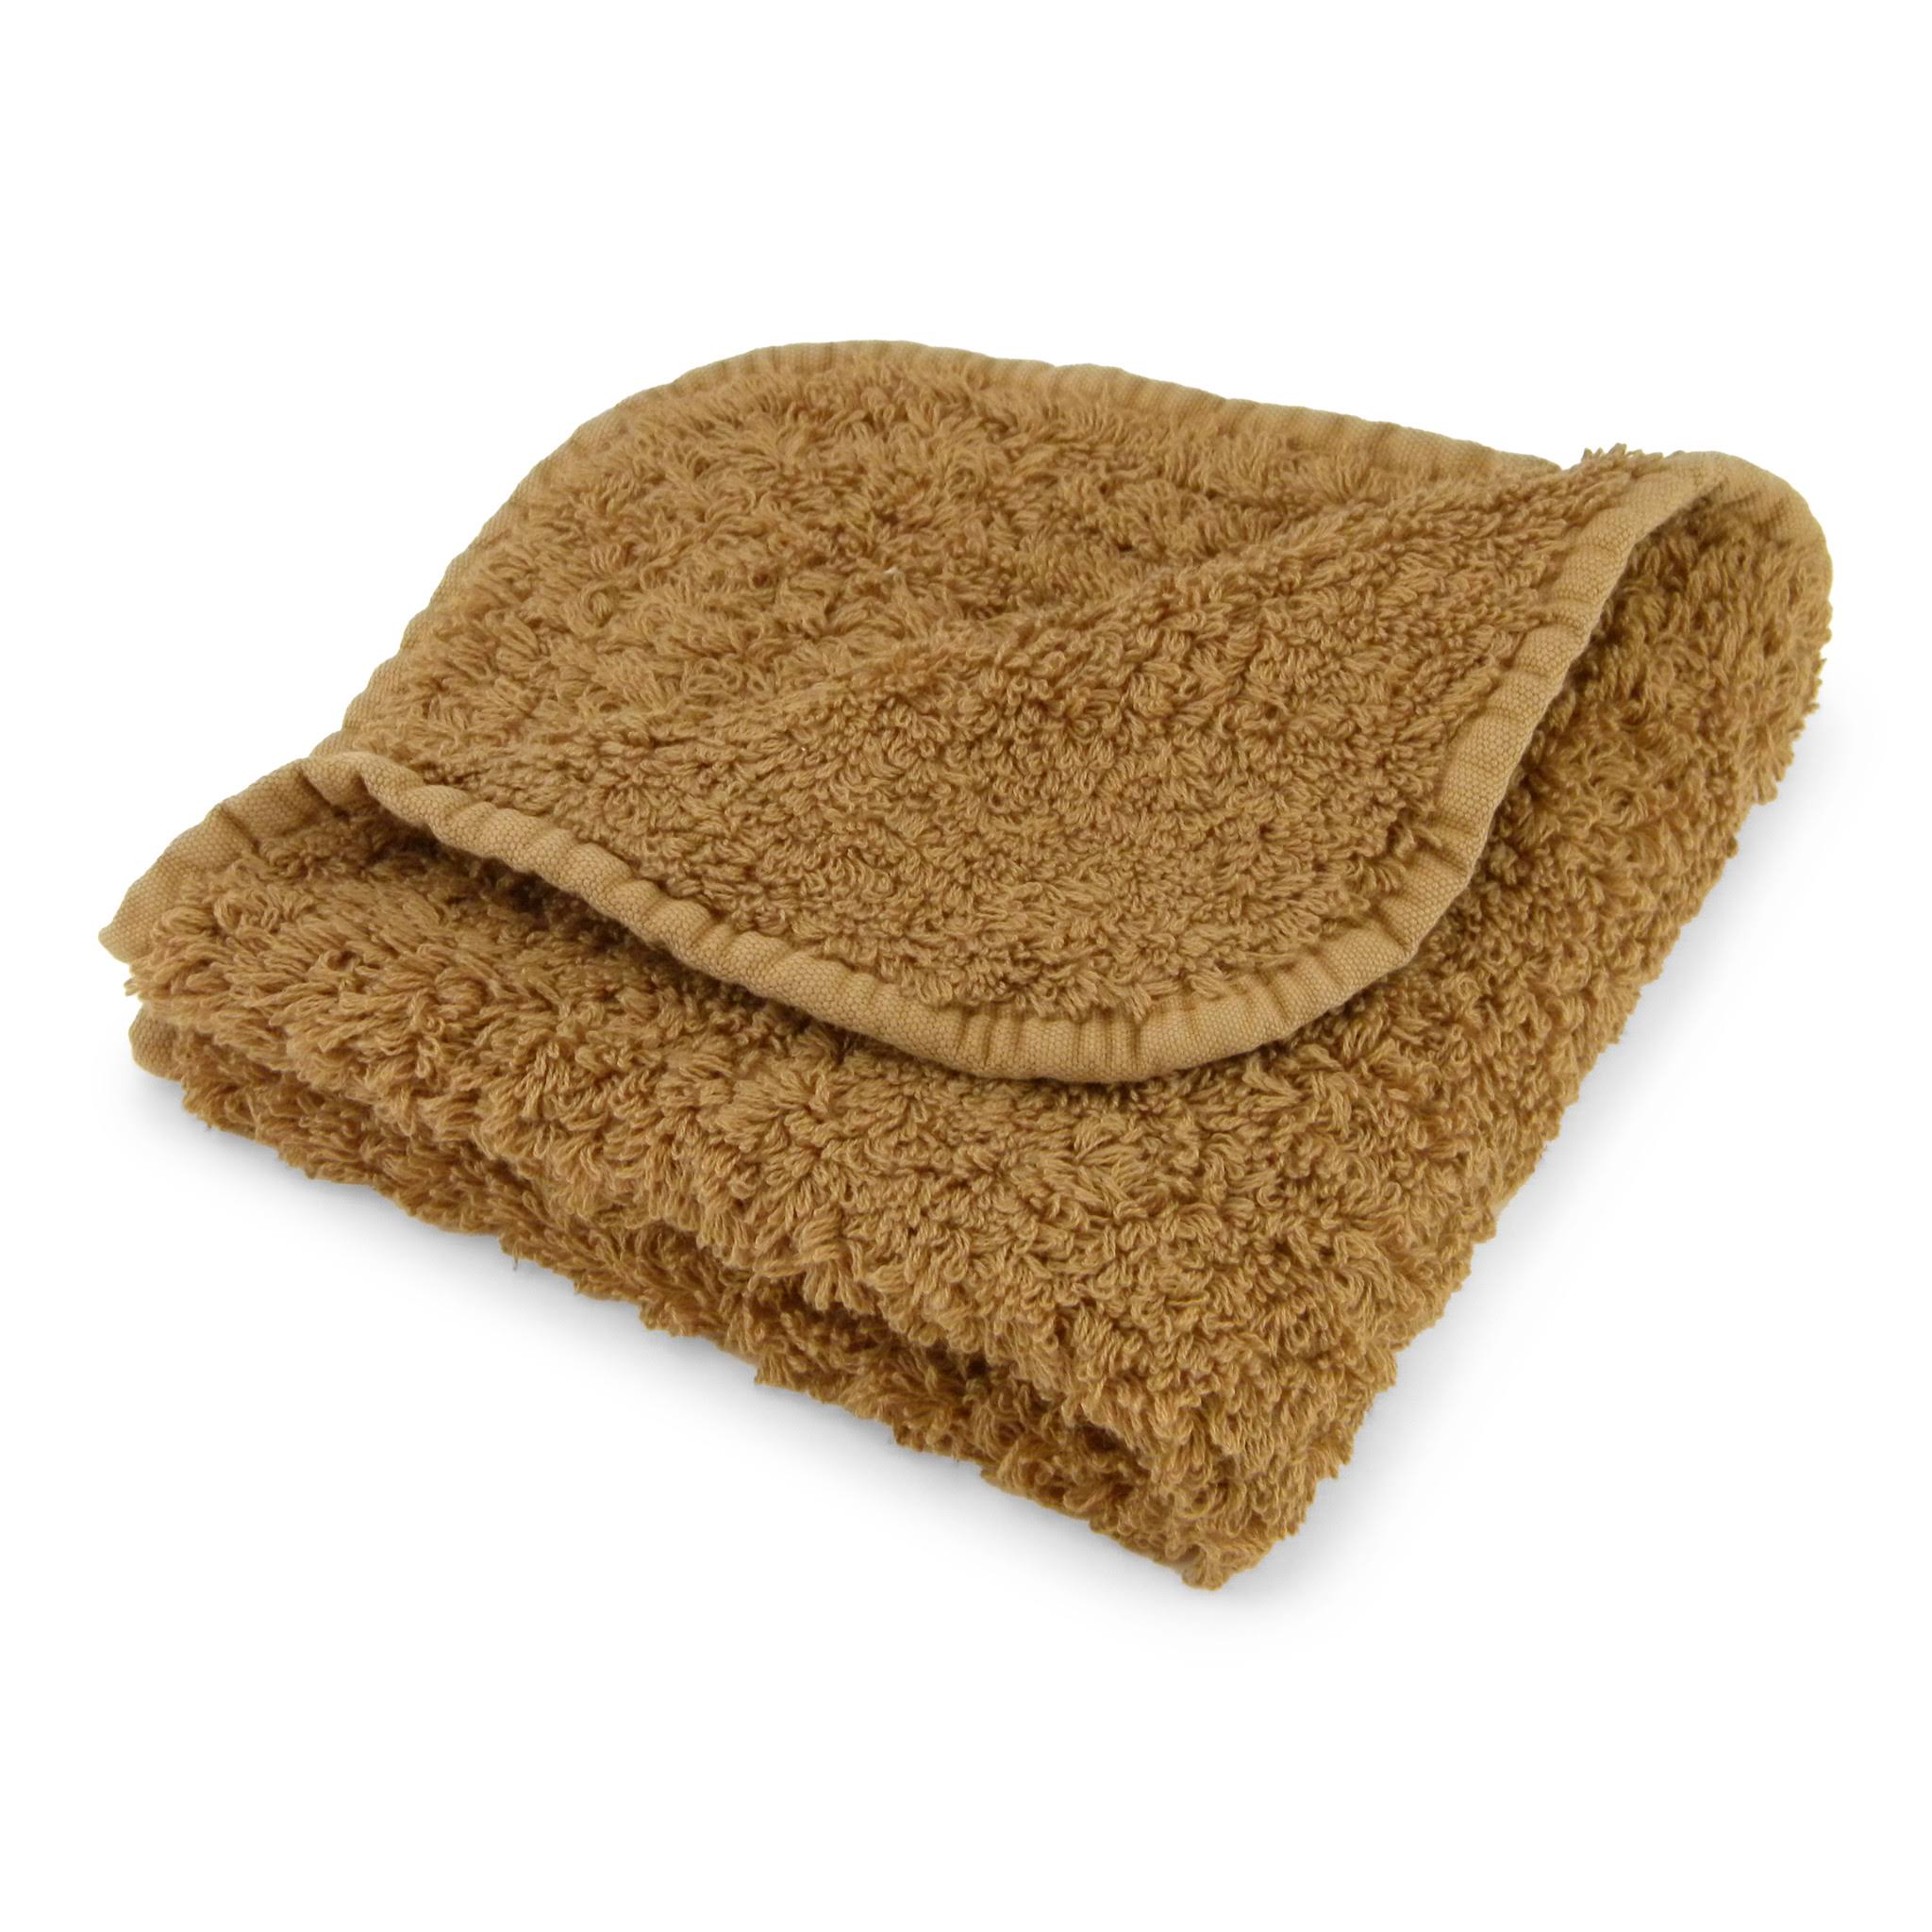 Abyss Super Pile Towels - Bath Towel 28x54" Gold 840